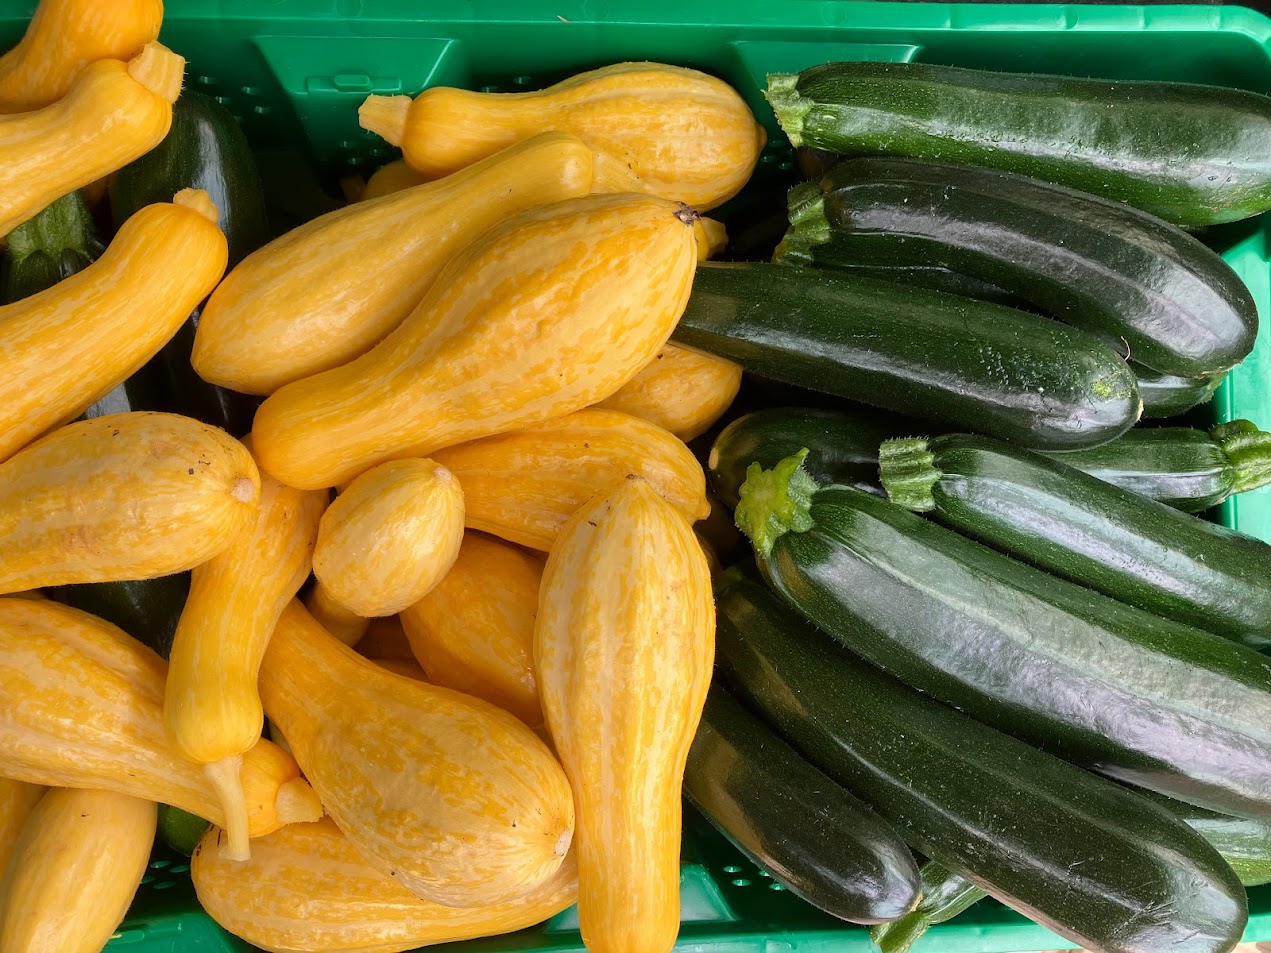 yellow squash and zucchini in a harvest bin